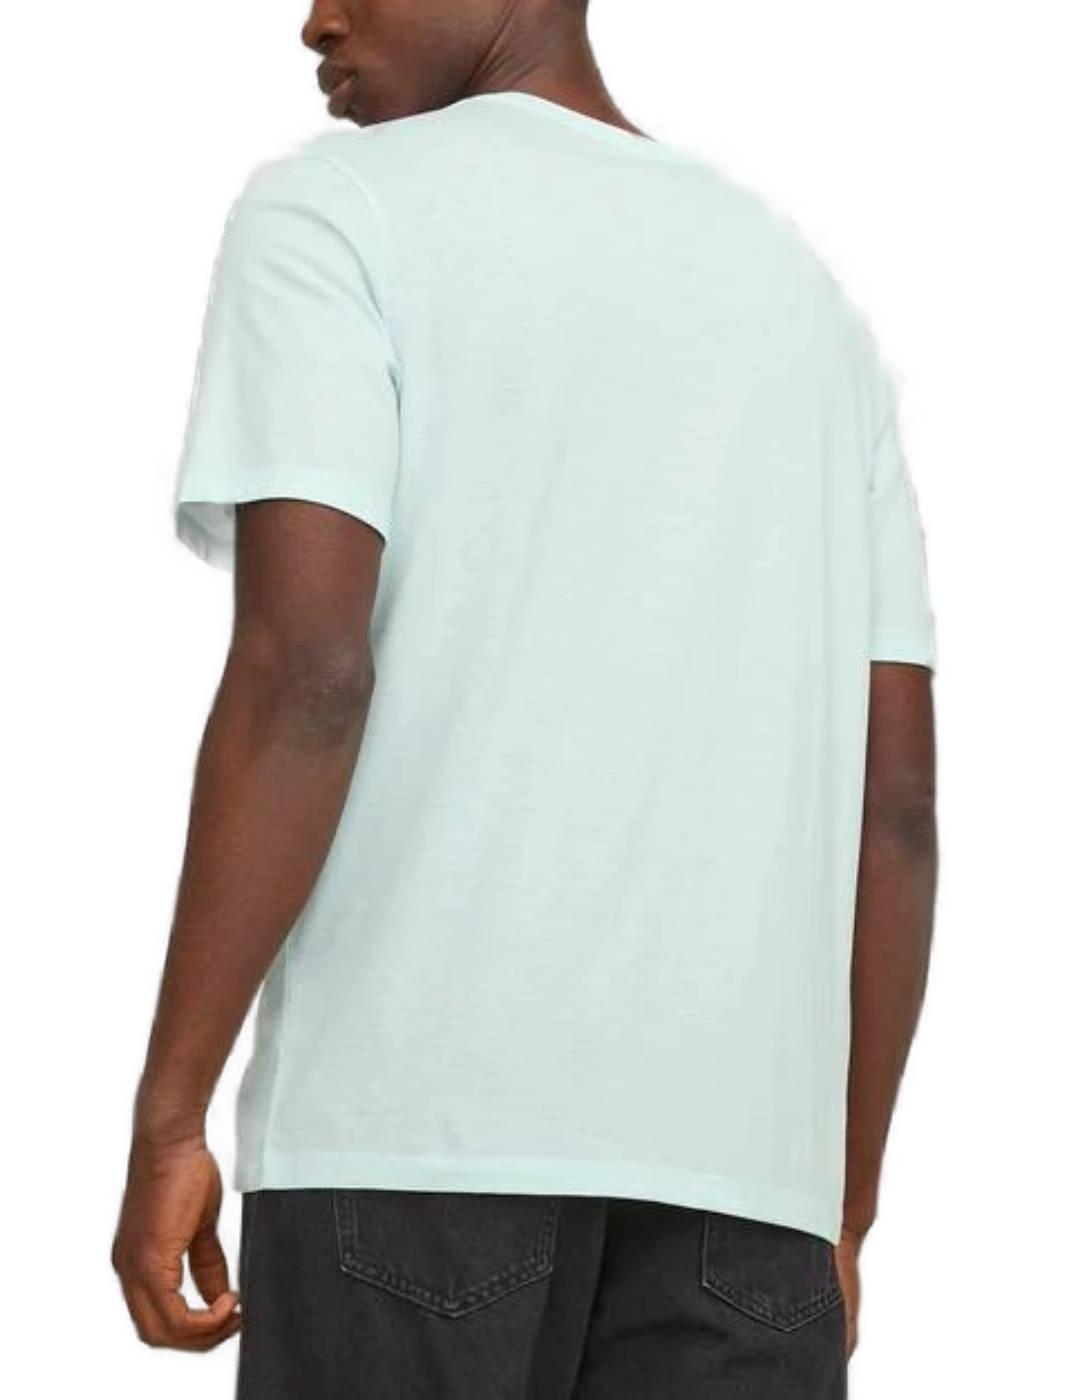 Camiseta Jack&Jones Logo celeste manga corta para hombre